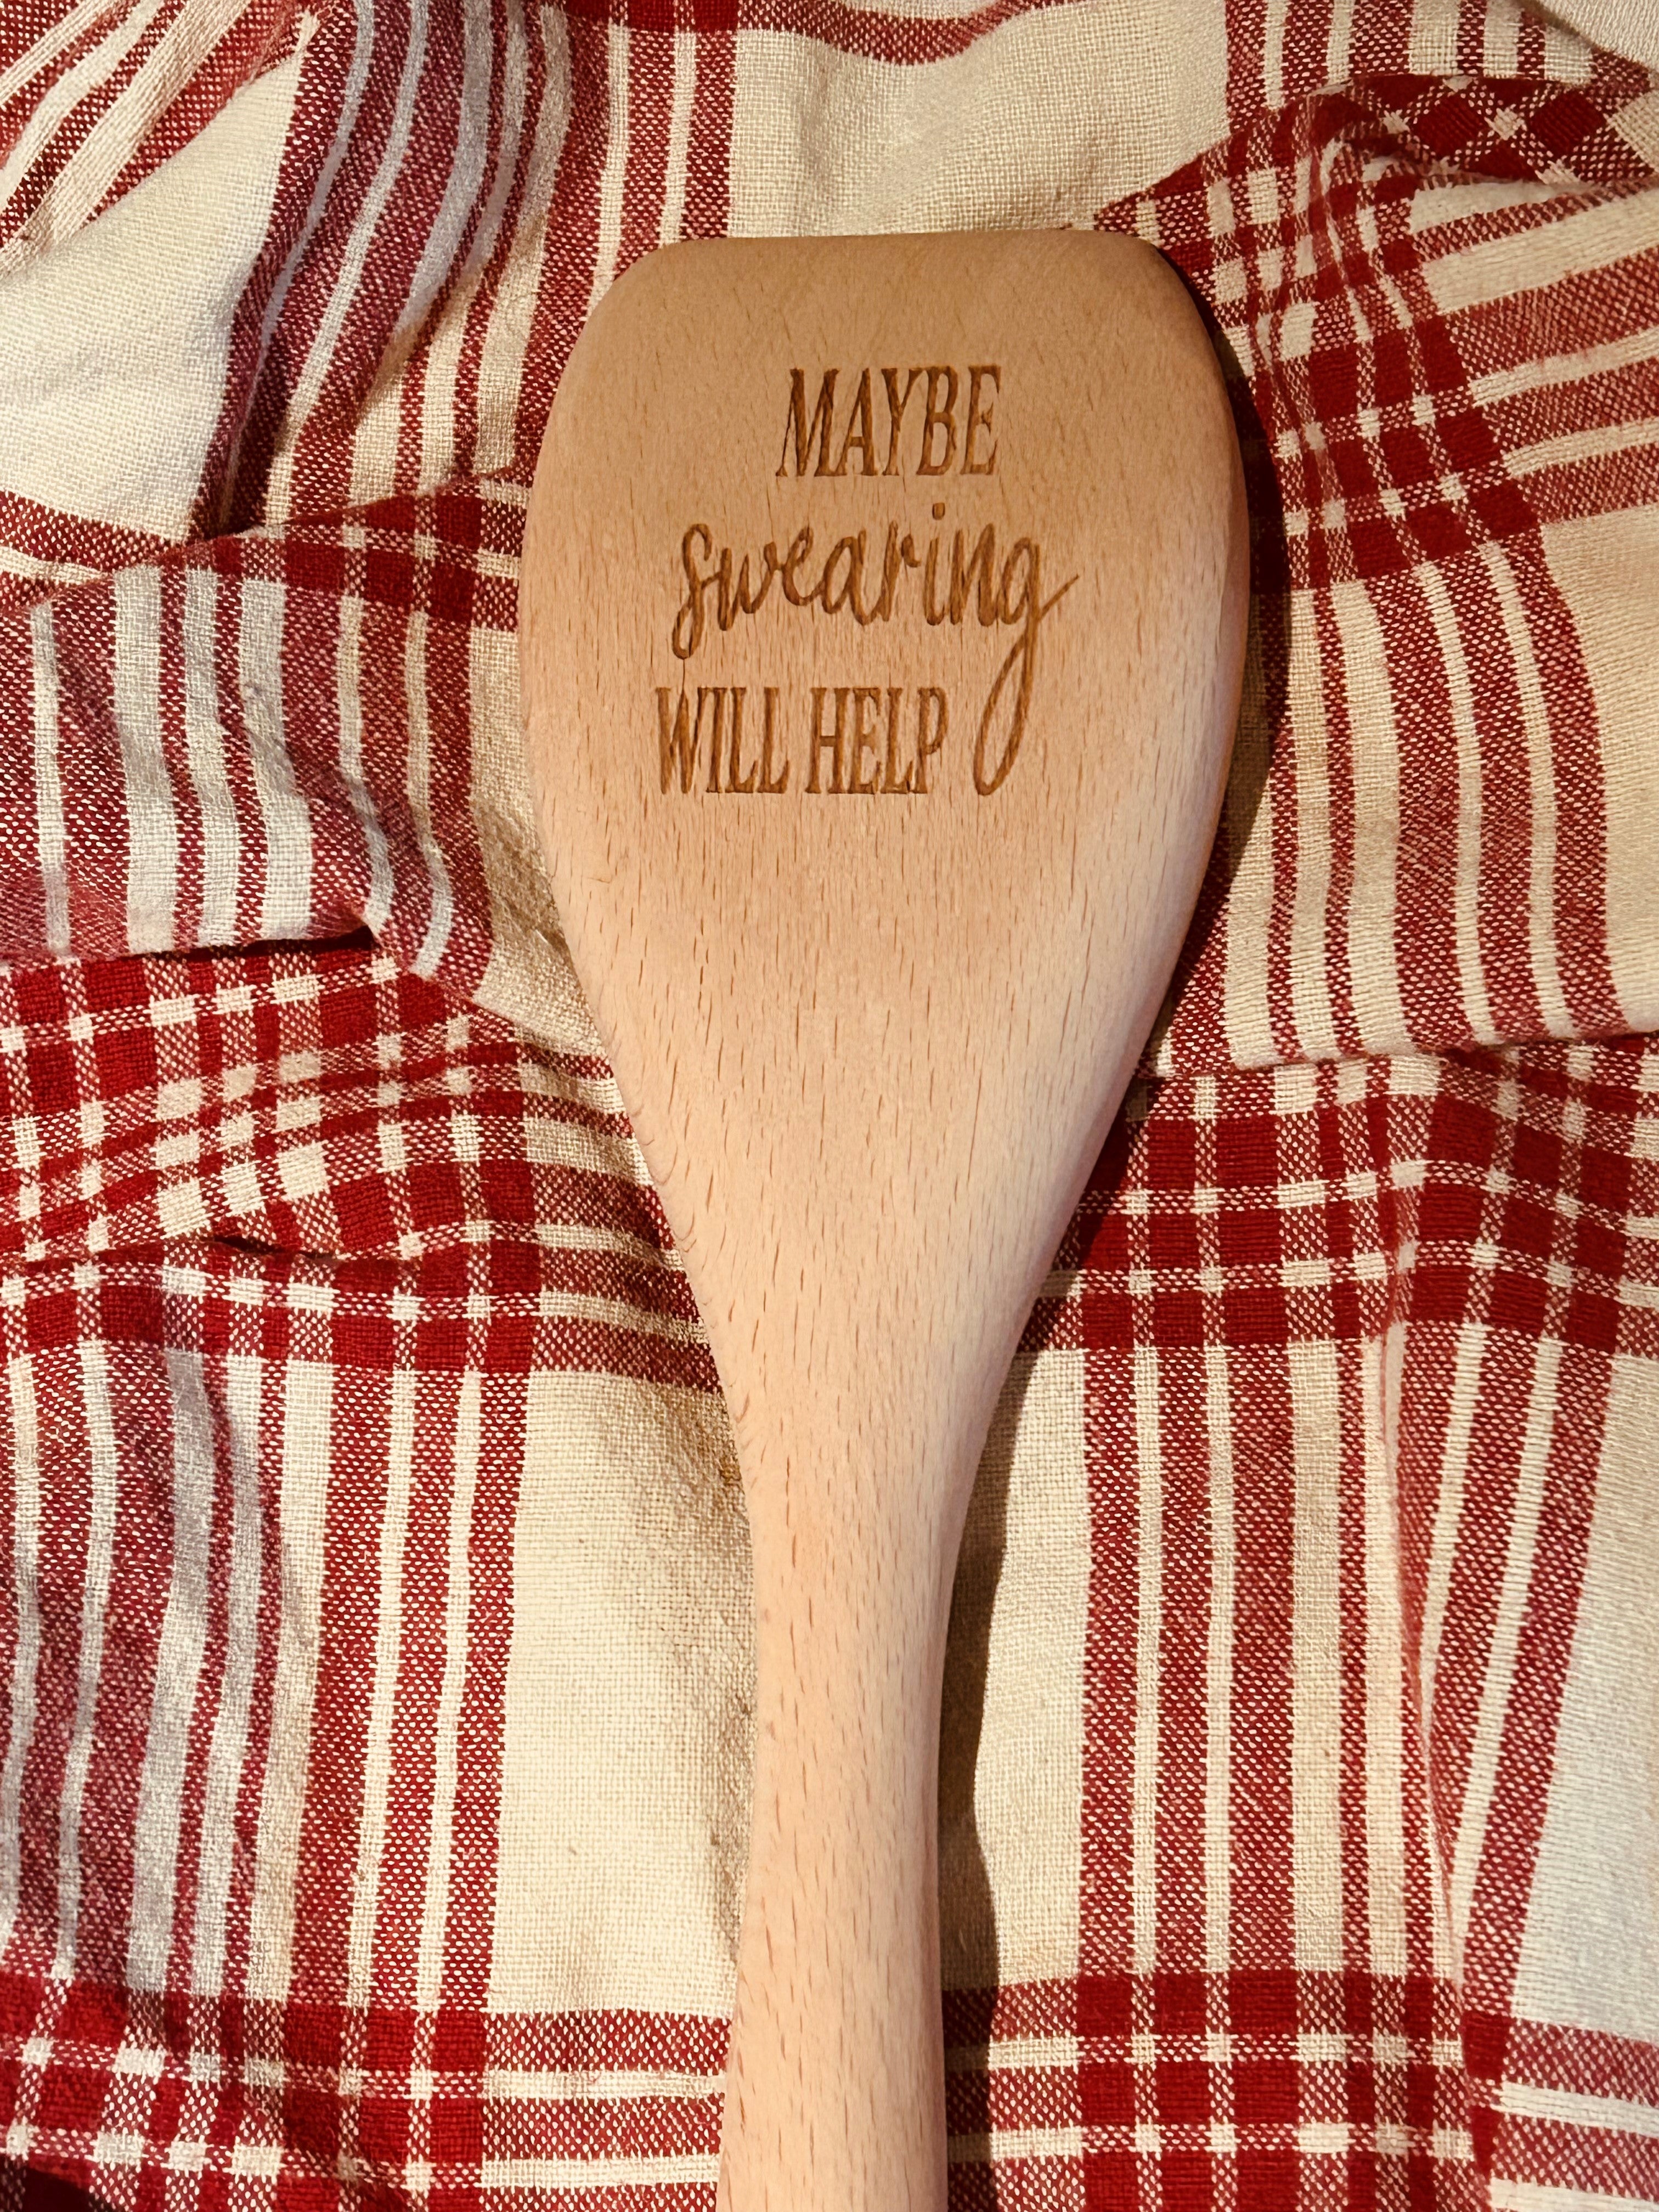 Maybe Swearing Might Help Spoon/Spatula